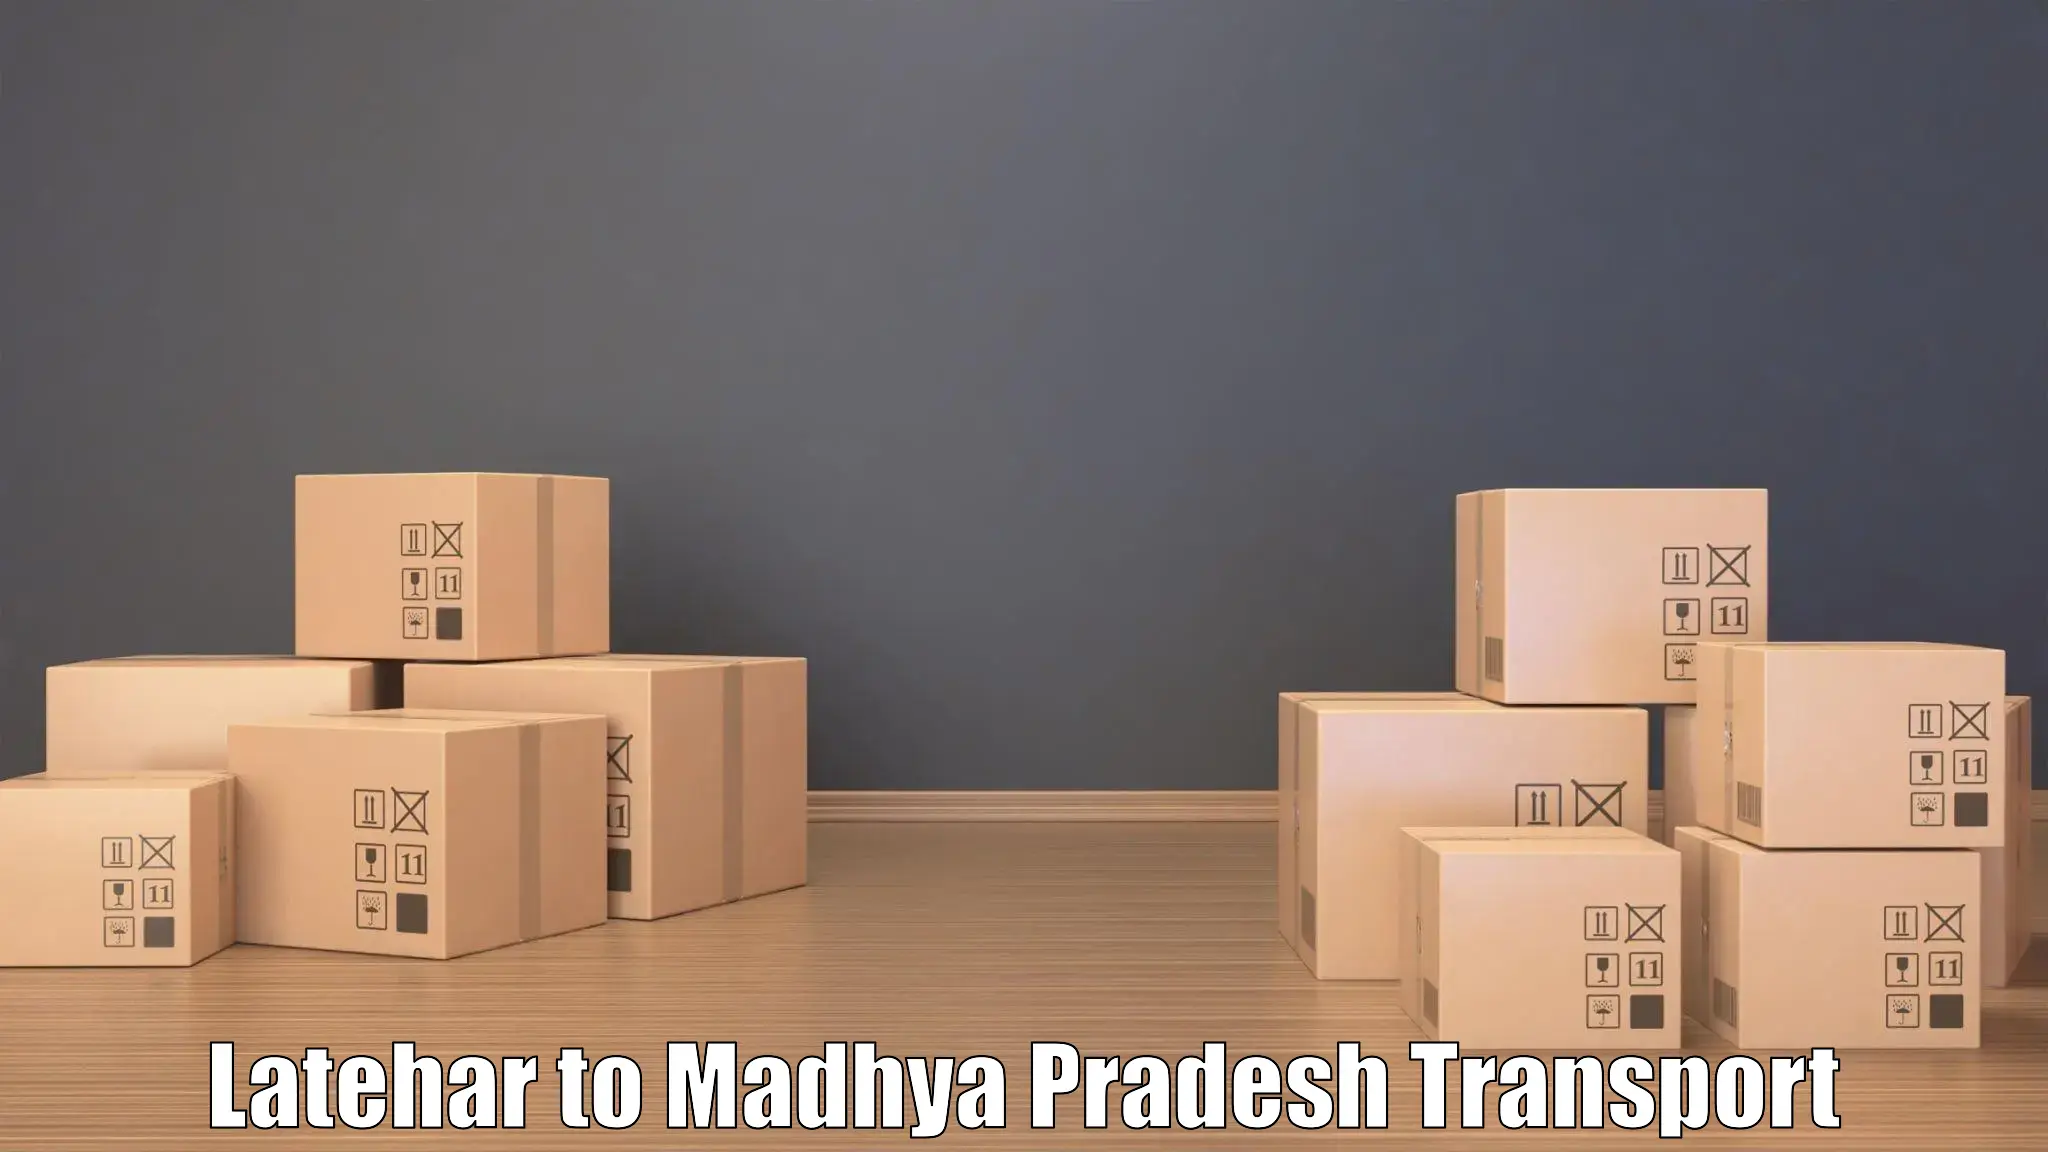 Truck transport companies in India Latehar to IIIT Bhopal